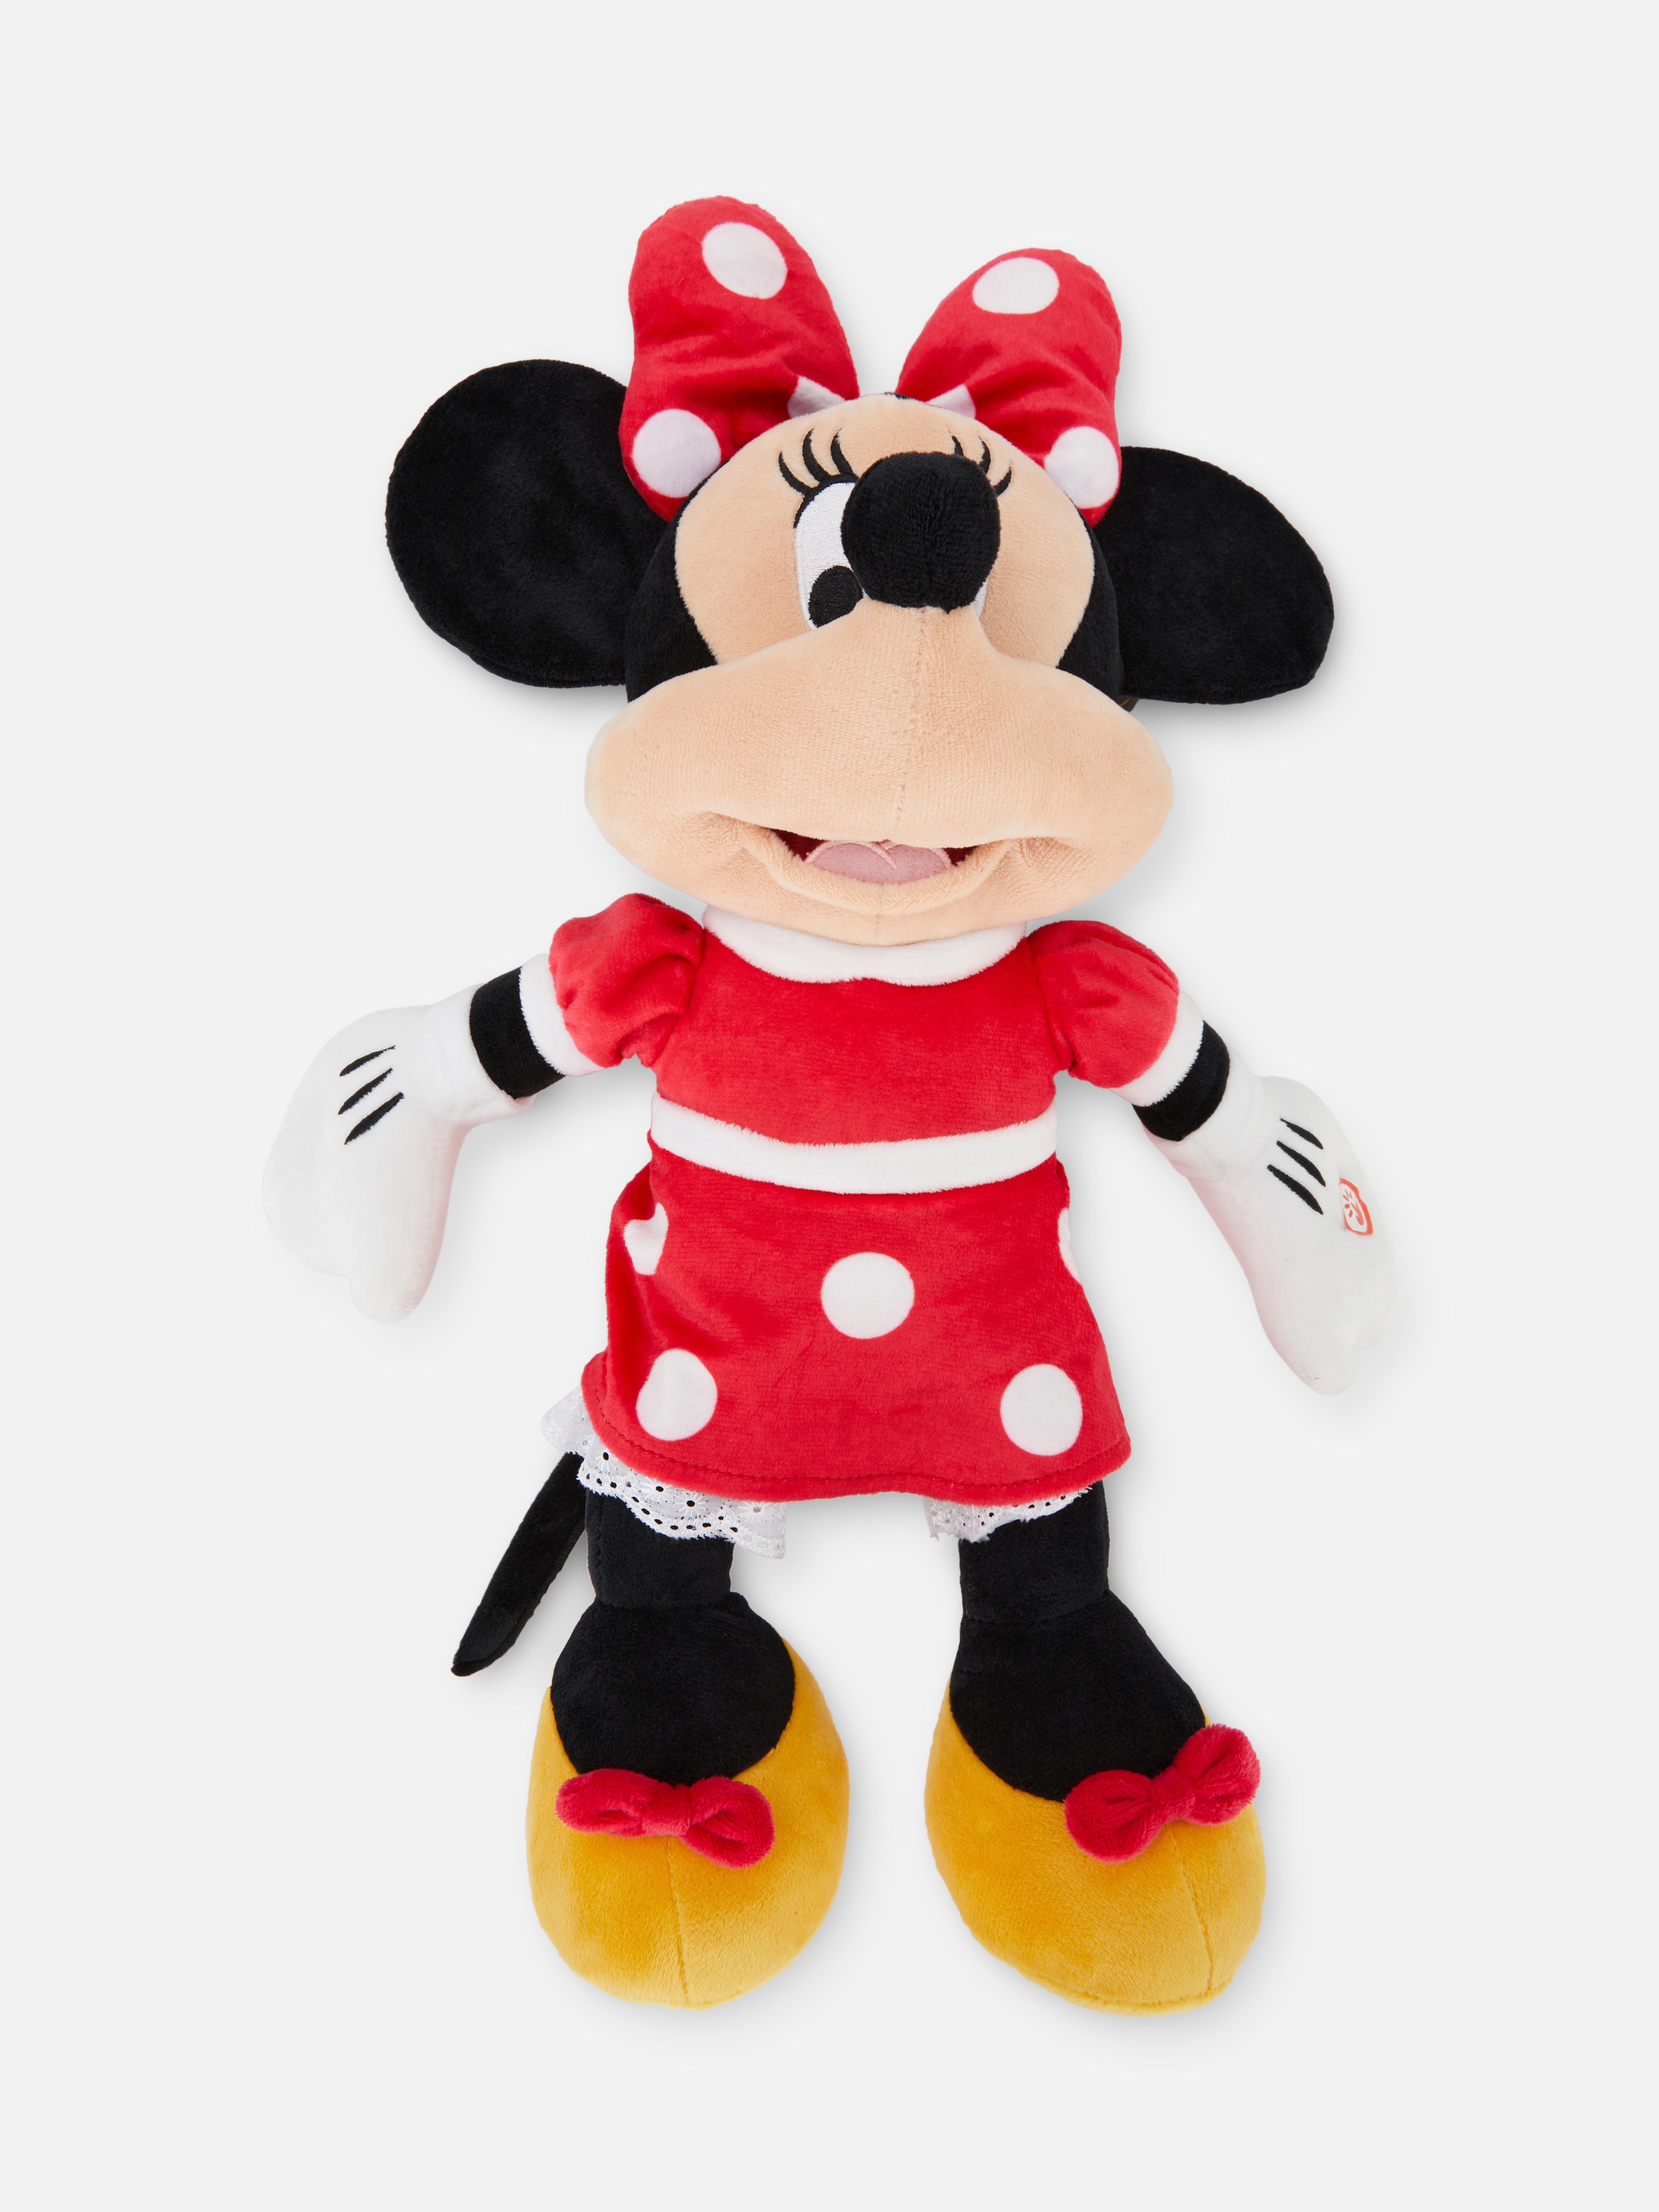 Disney’s Minnie Mouse Large Plush Toy